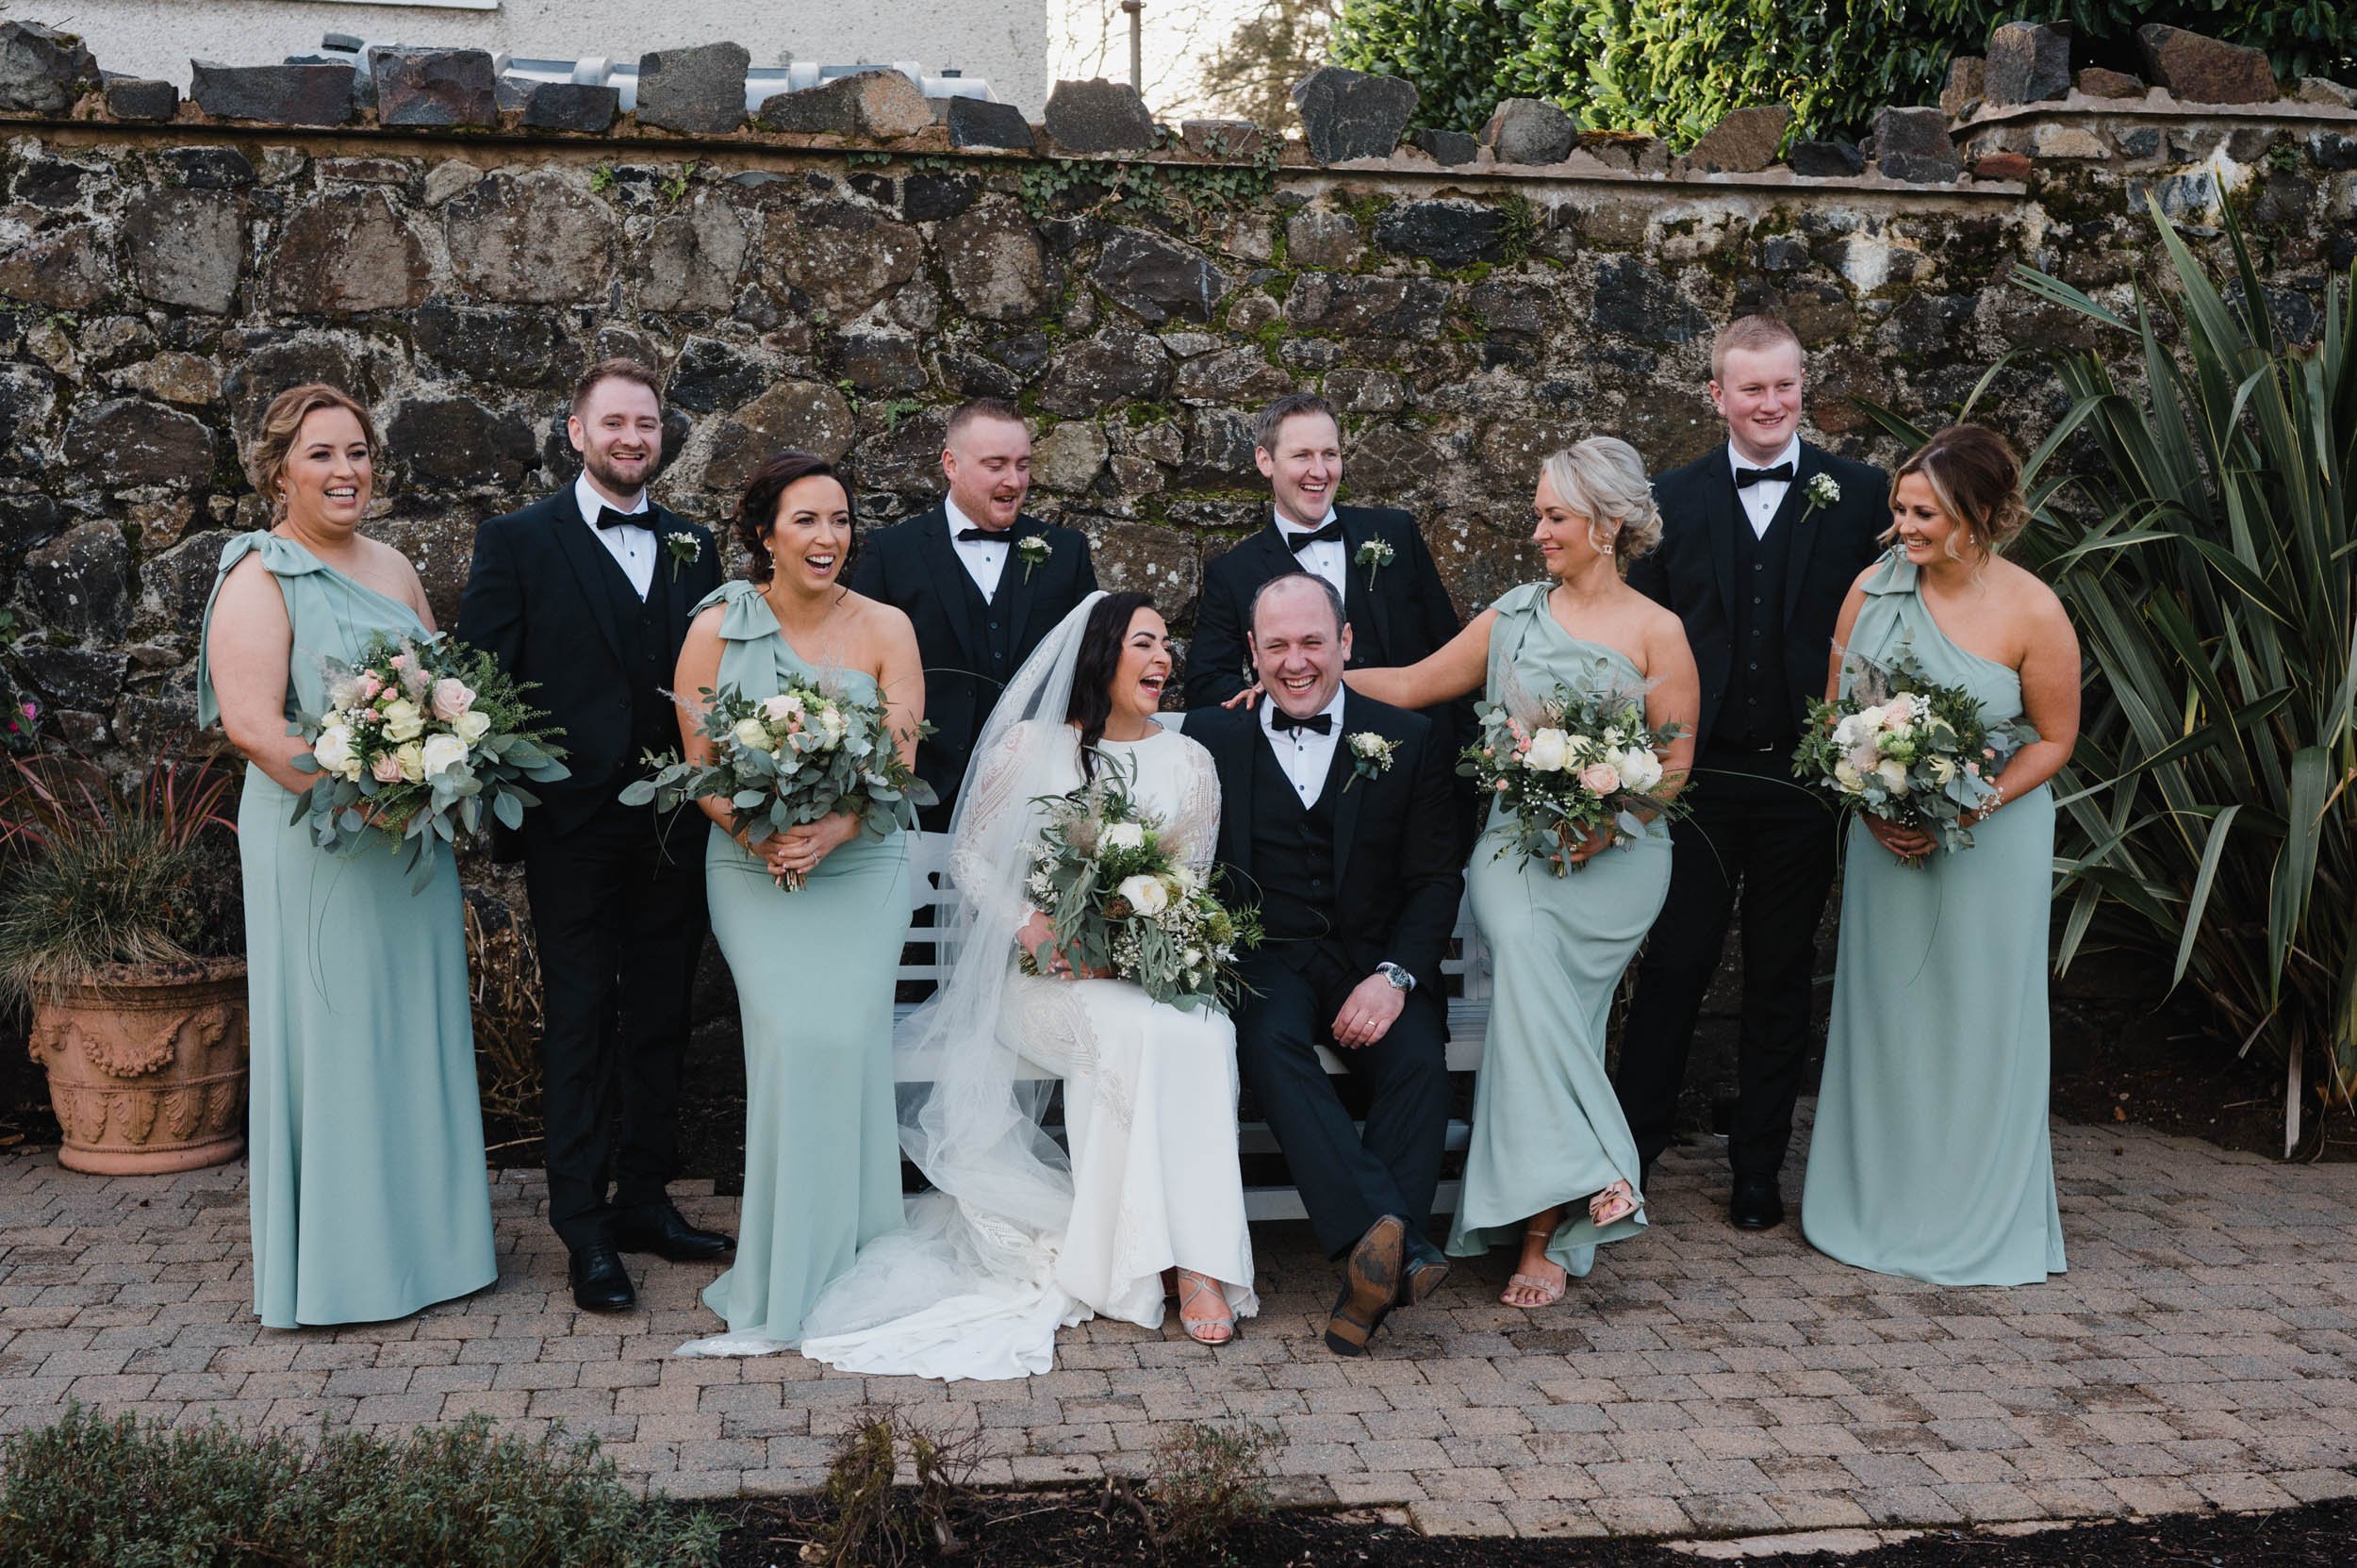 Michelle & Andrew - Tullyglass Ballymena - Paula Donnelly Wedding Photographer Northern Ireland29.jpg